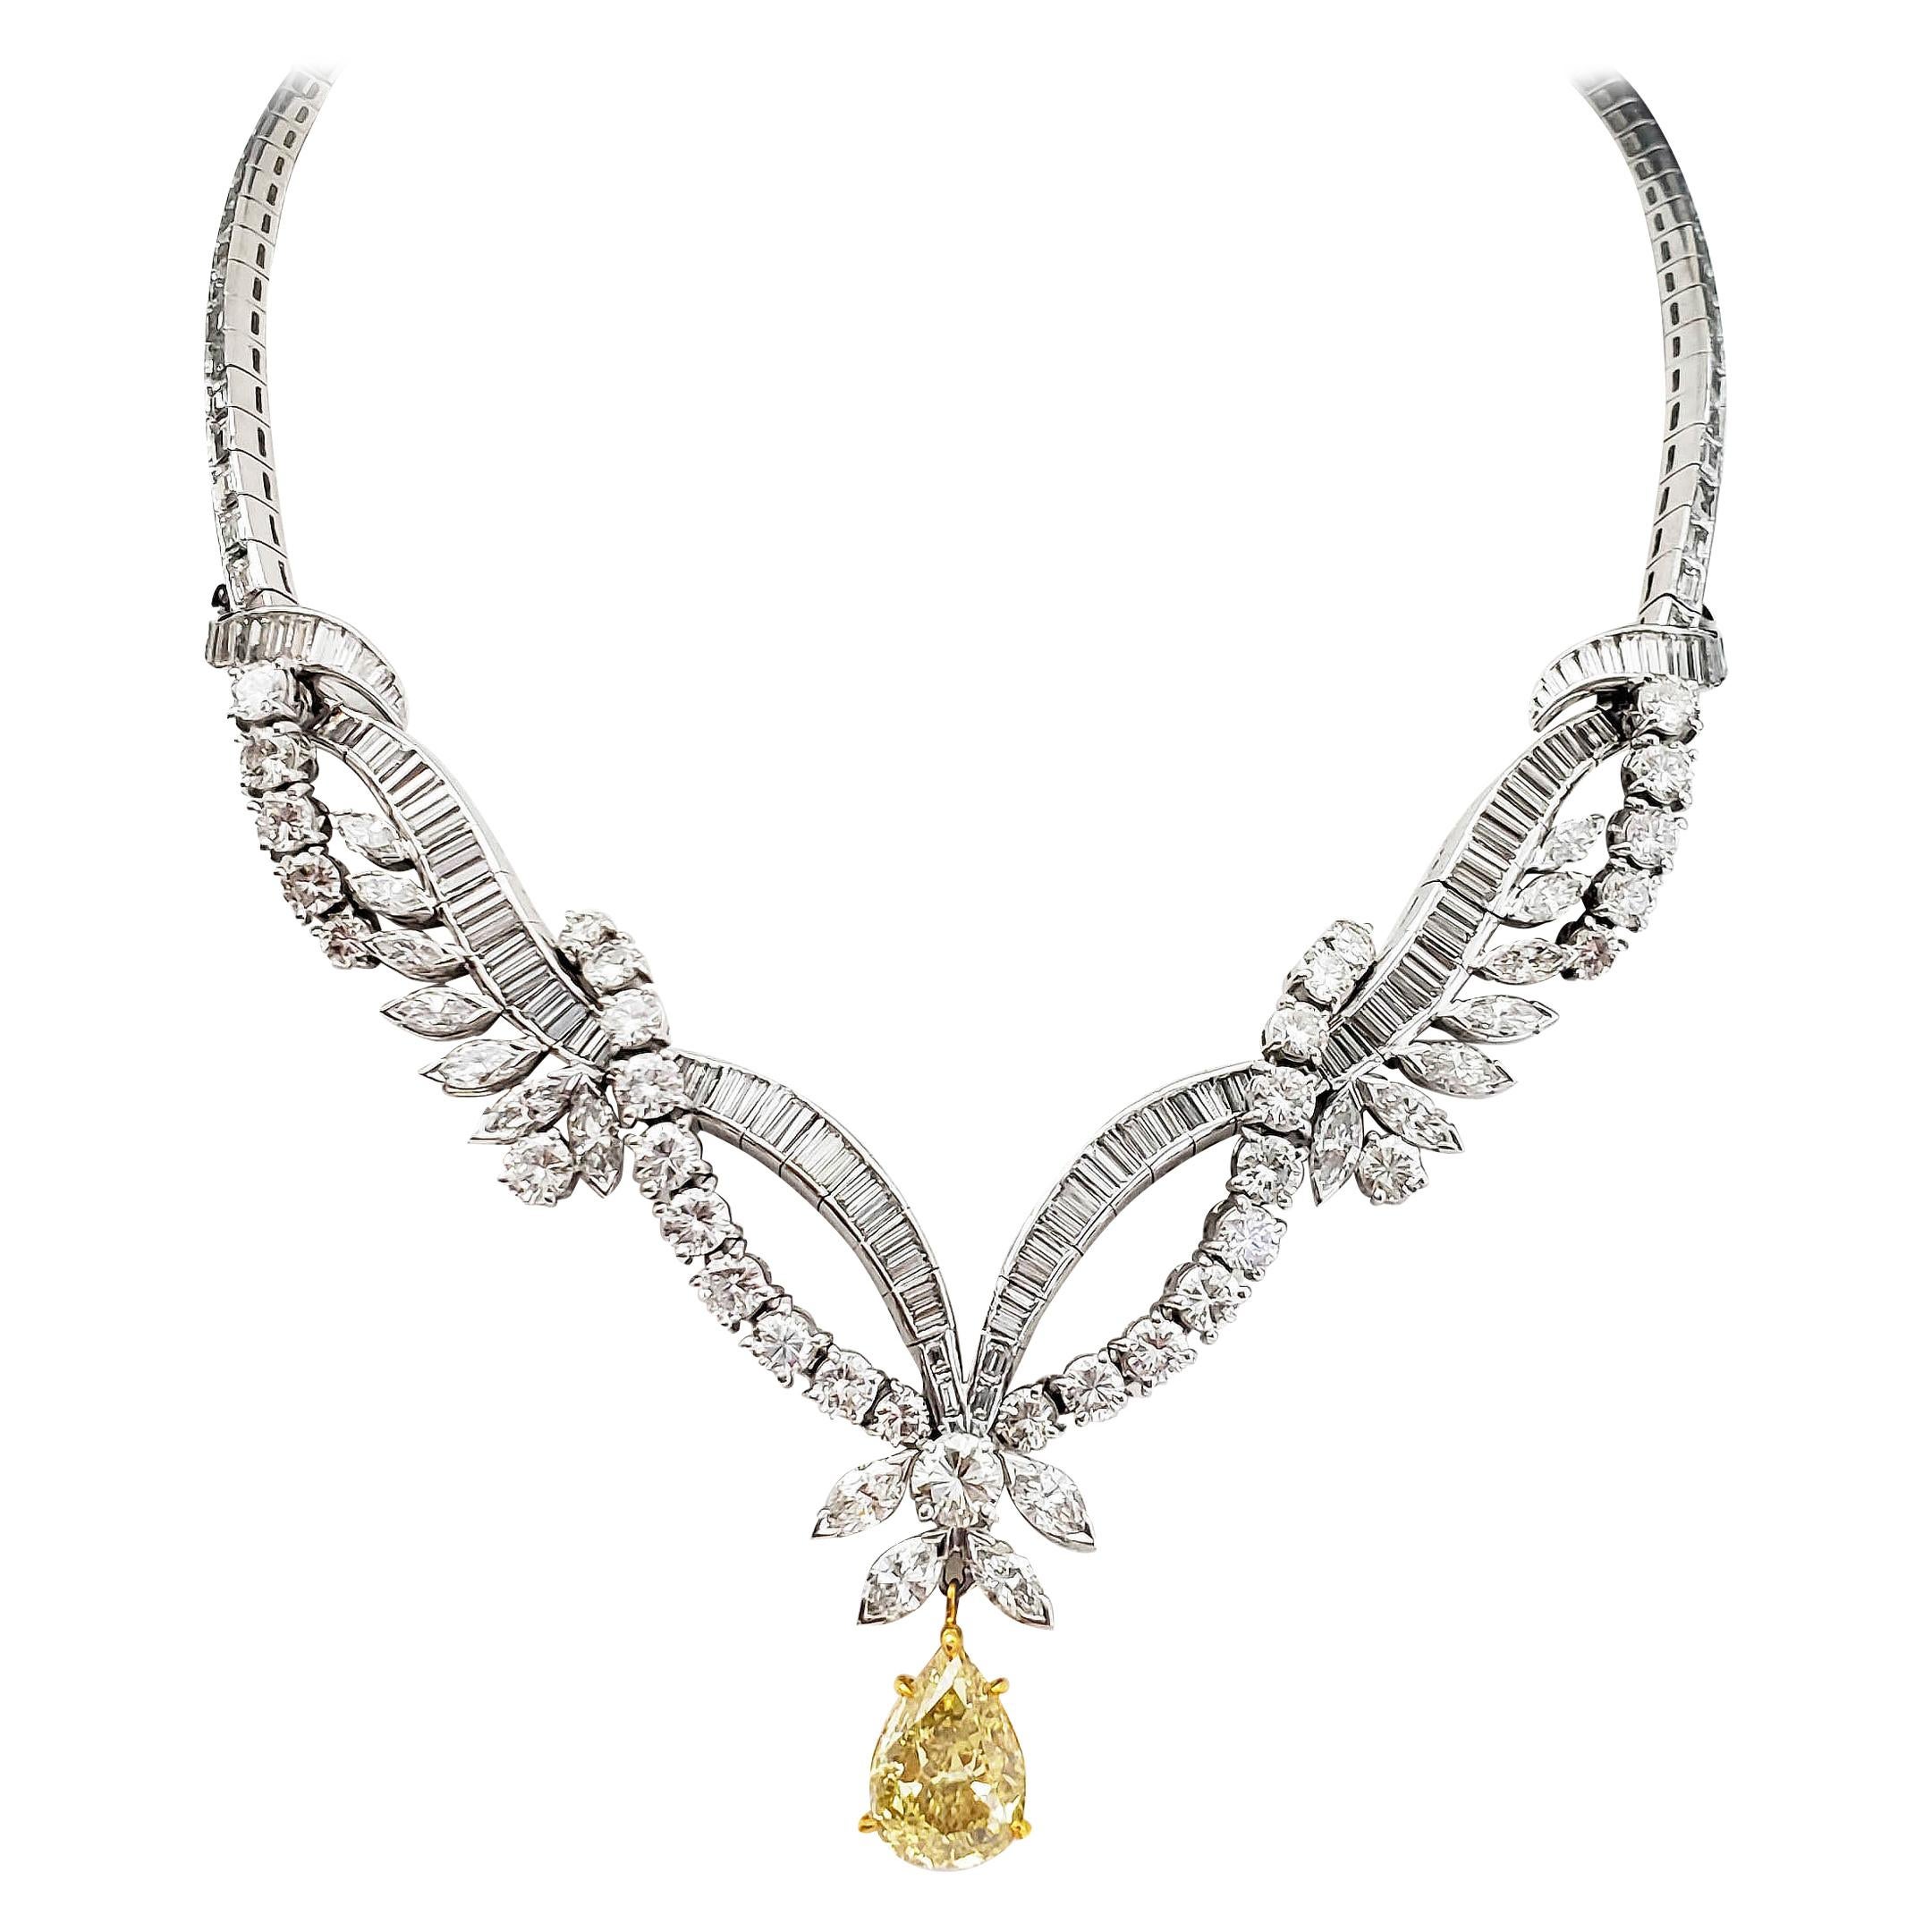 Scarselli Infinite Necklace 4.15 Carat Fancy Yellow Pear Shape Diamond, GIA